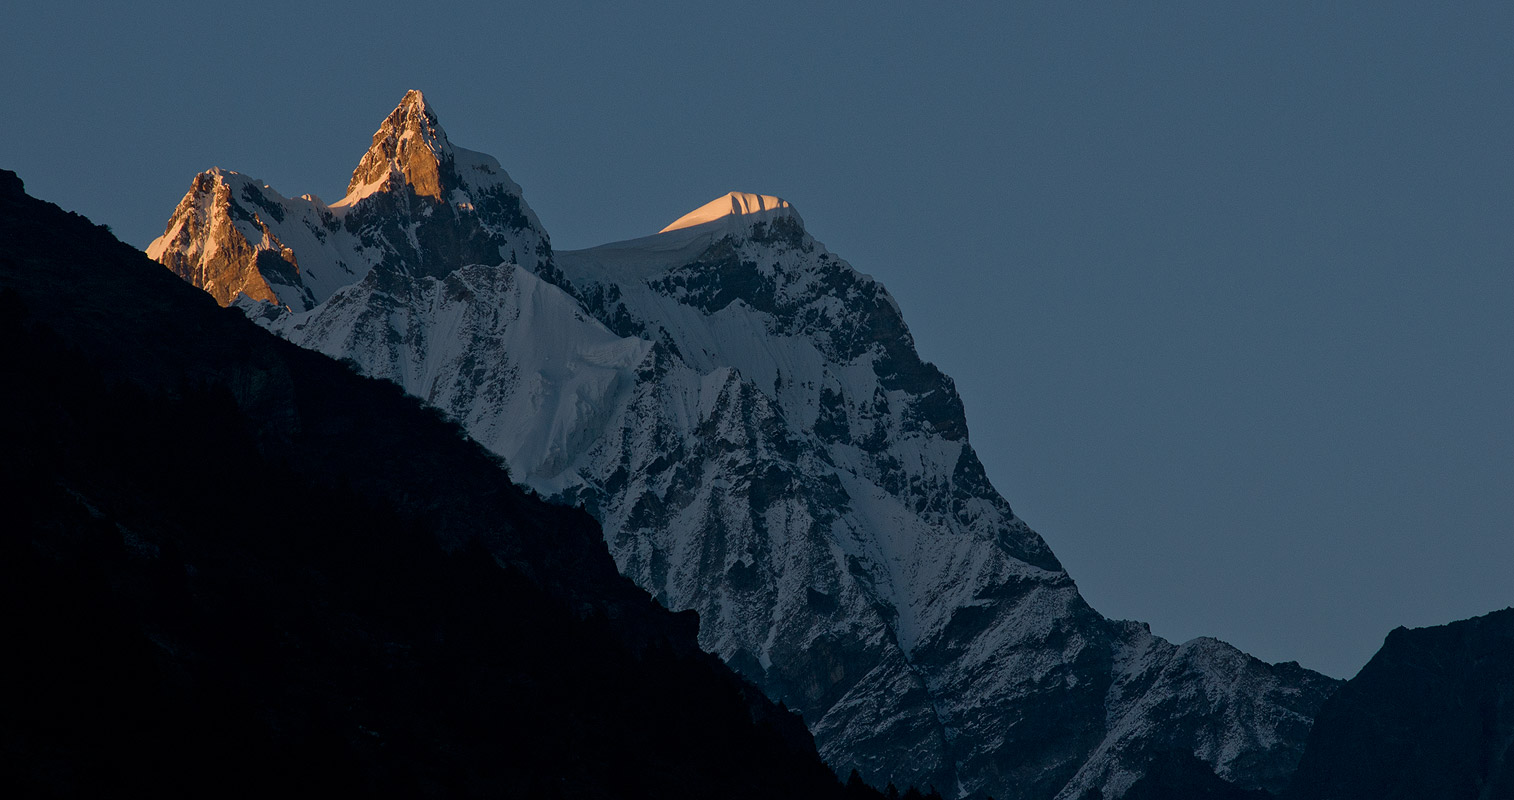 At sunset from Take Hankhar in the Mo Chhu valley below Laya villageNikon D300, 180mm